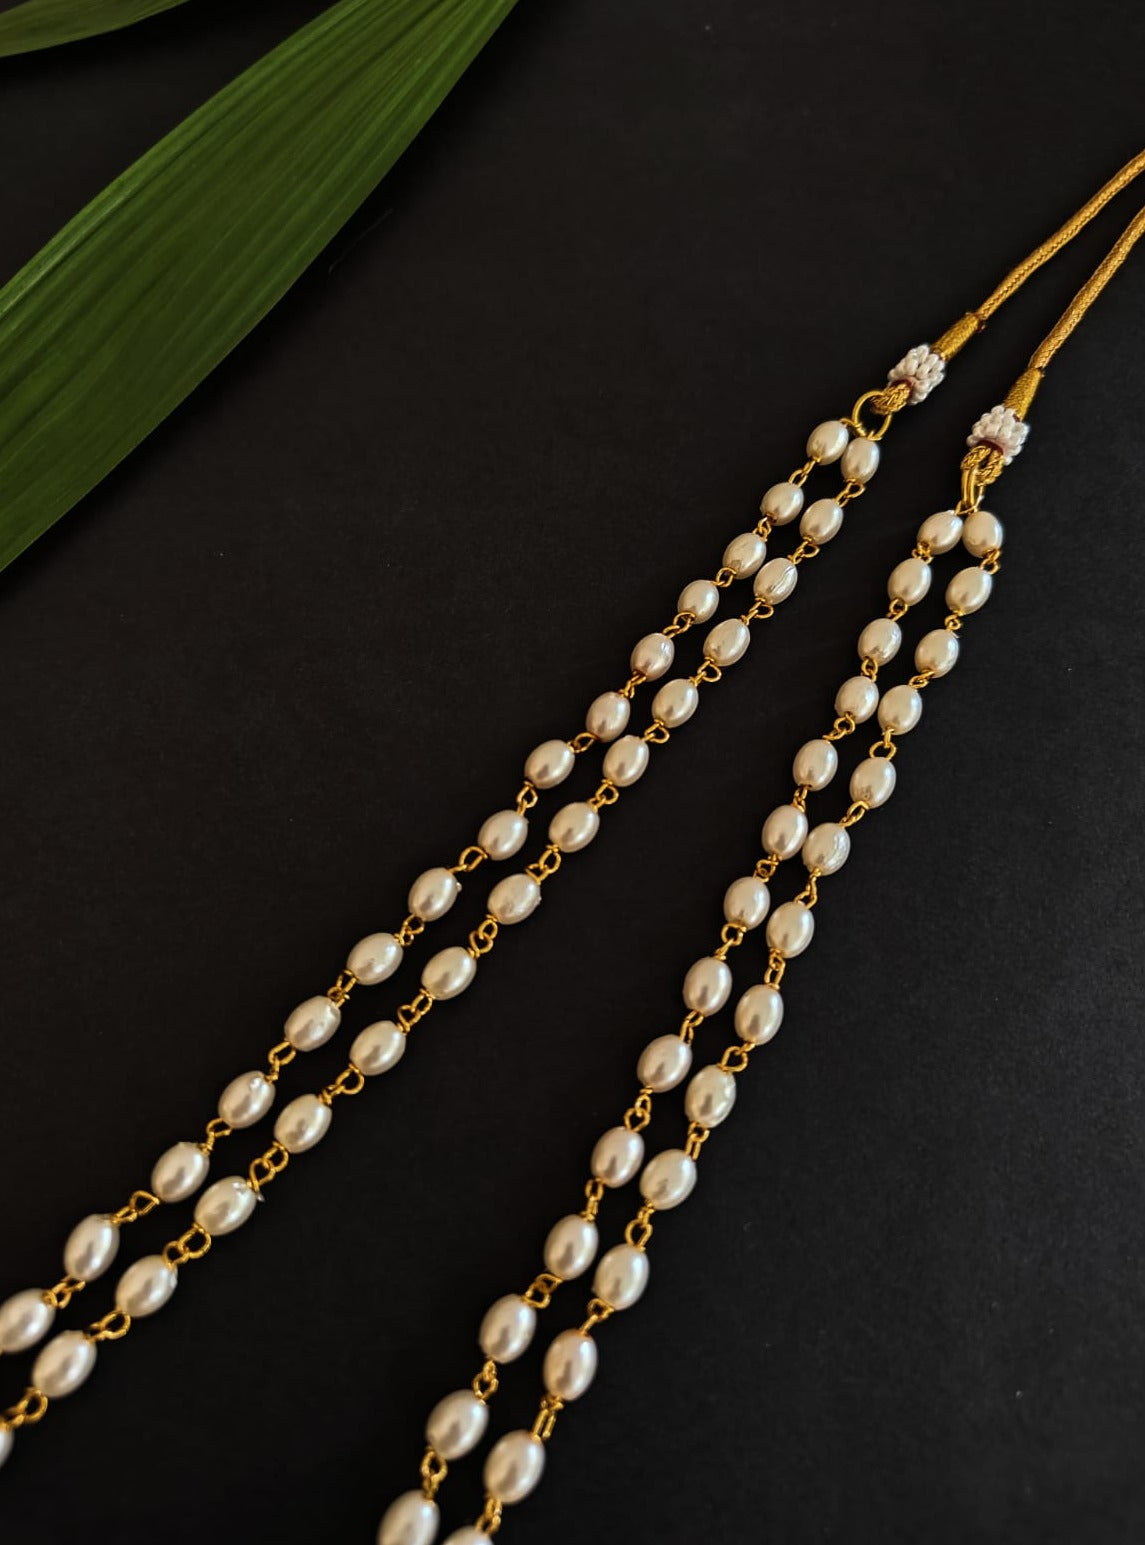 Double Layered Plain oval shaped pearls kanthi for Batu.It is worn by Batu for Vratabandh/Munj/Upnayan/ Thread Ceremony.Mundavalya,kanthi,bhikbali,topi,pagdi are boys accessories exclusively designed using Pearls,glass beads,jadau & gold plated findings for Batu,for Upanayan/Vratabandha/munj /thread ceremony.